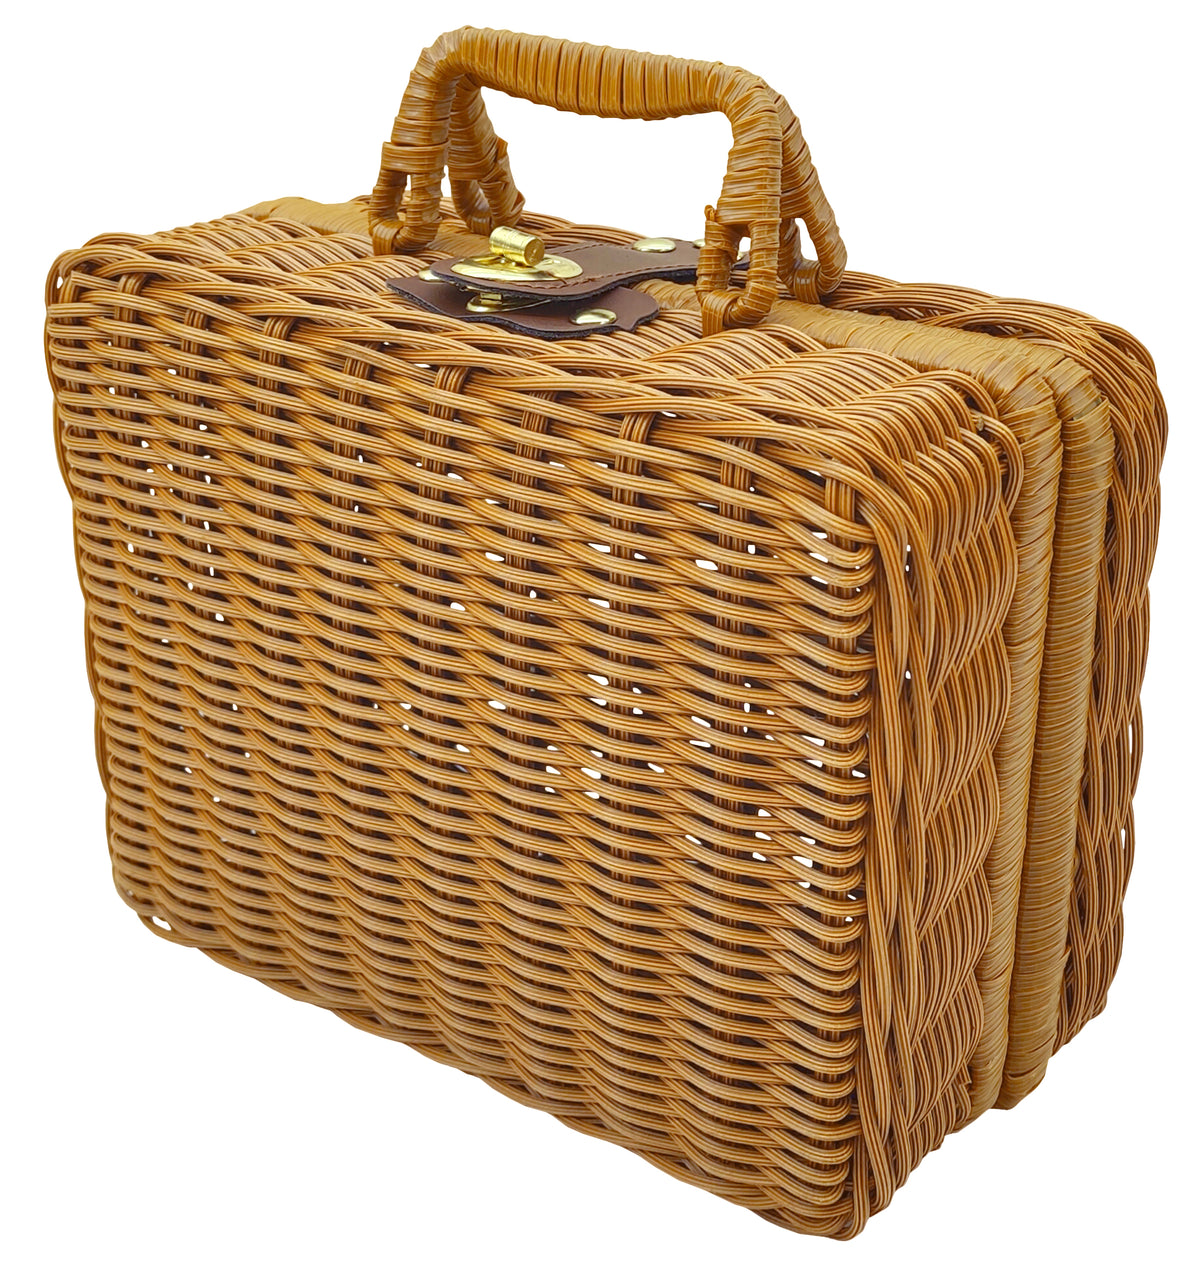 Food Safe Washable Wicker Picnic Basket Suitcase